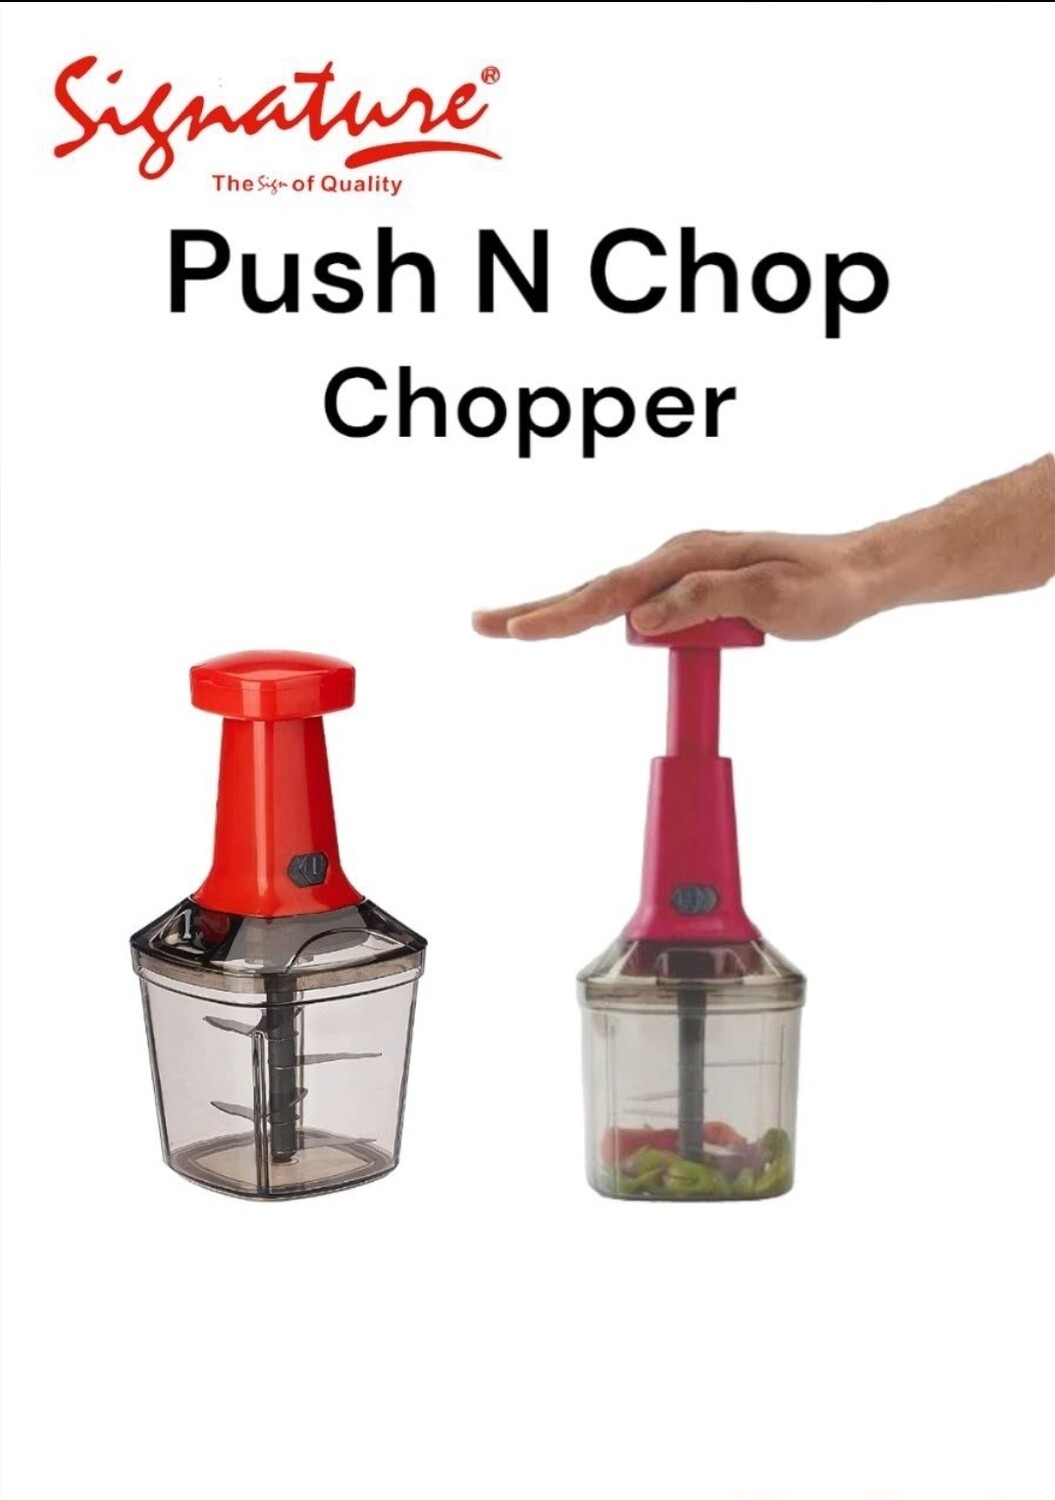 Signature Push N Chop Chopper